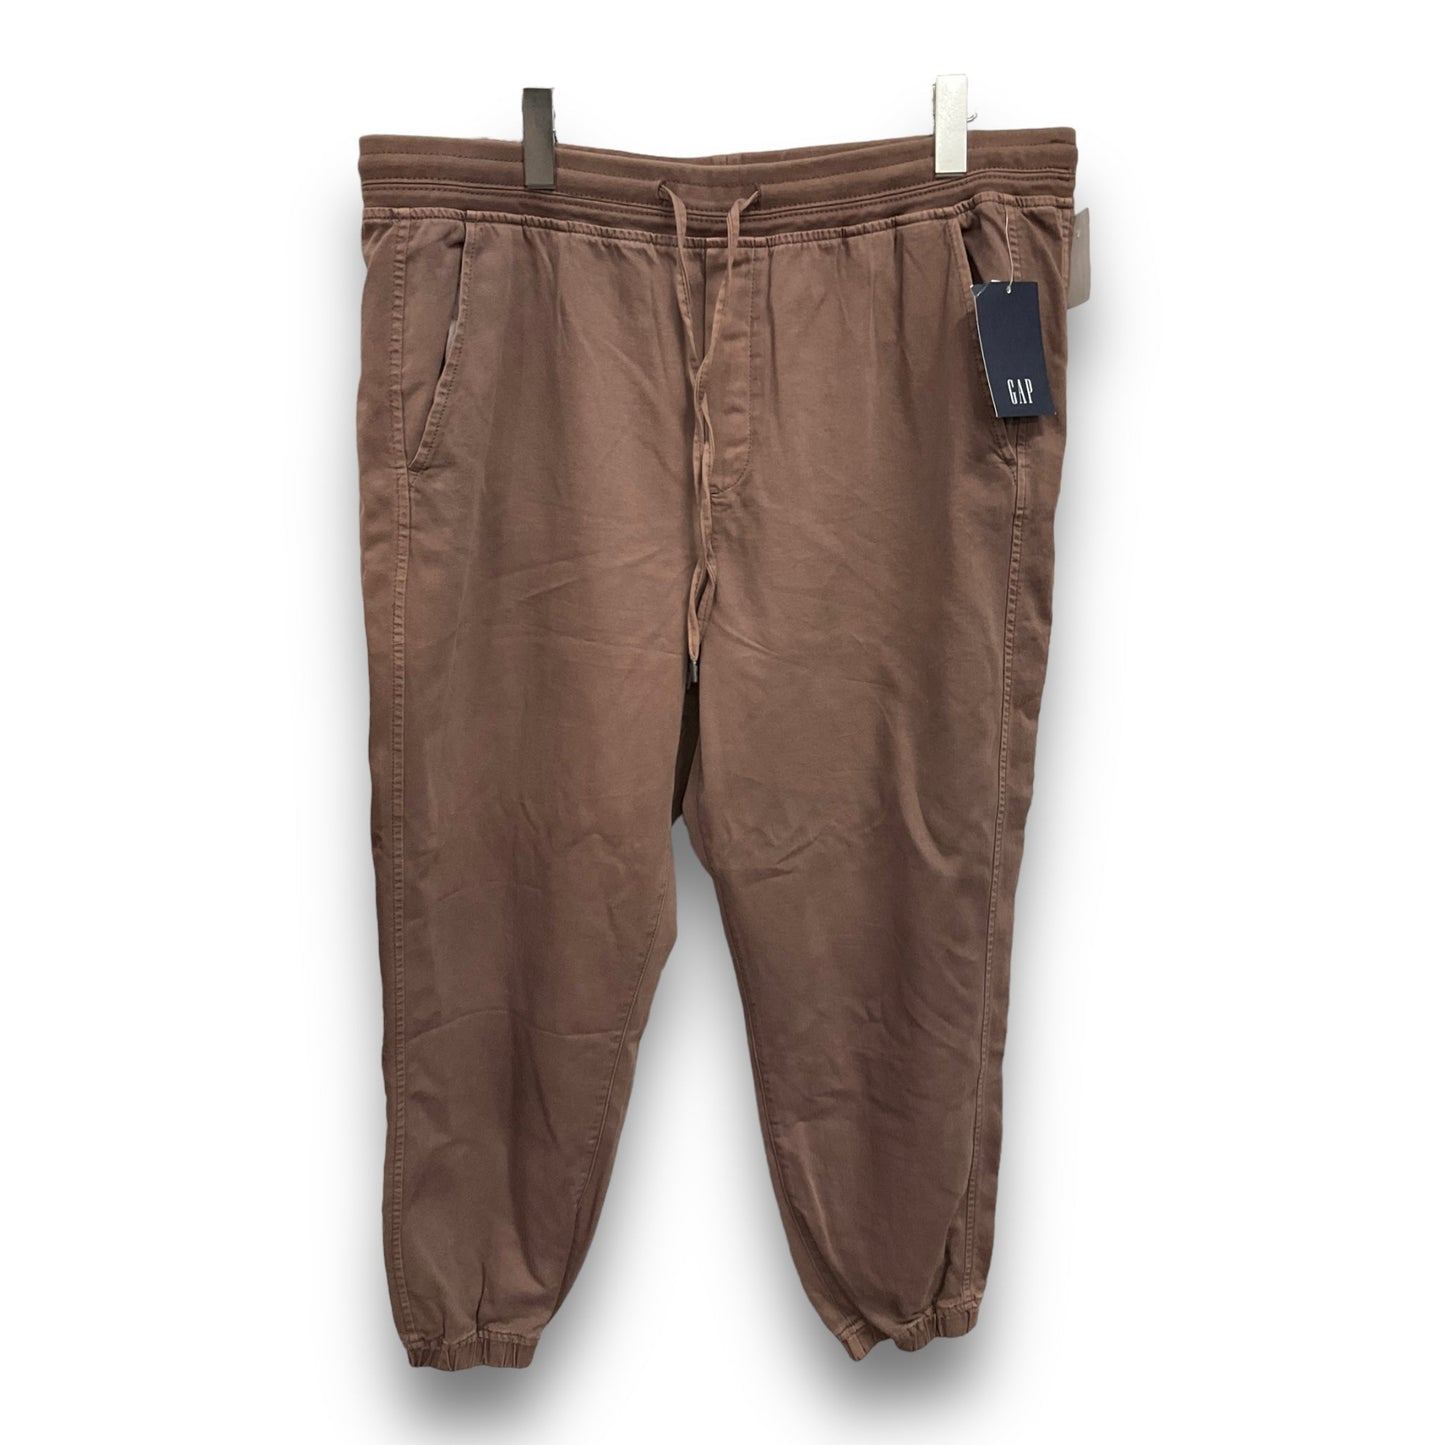 Pants Joggers By Gap  Size: Xl